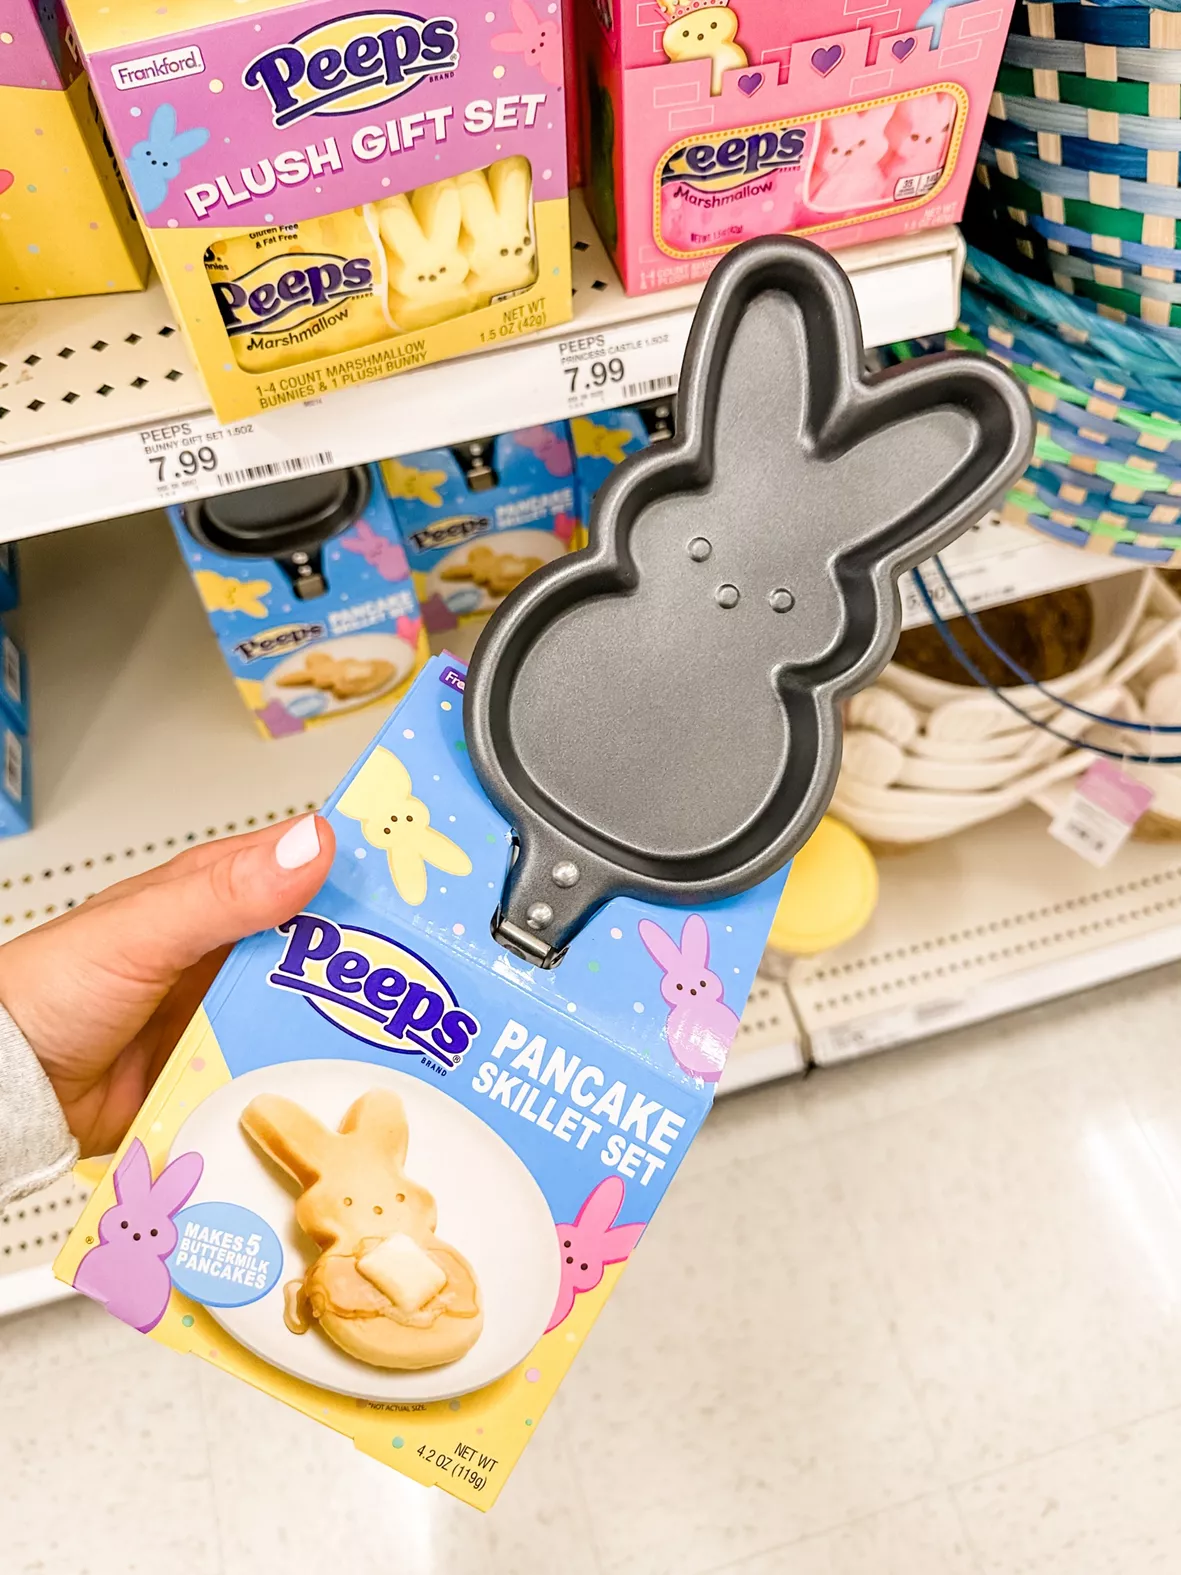 Bunny-Shaped Cookie Skillet or Pancake Pan